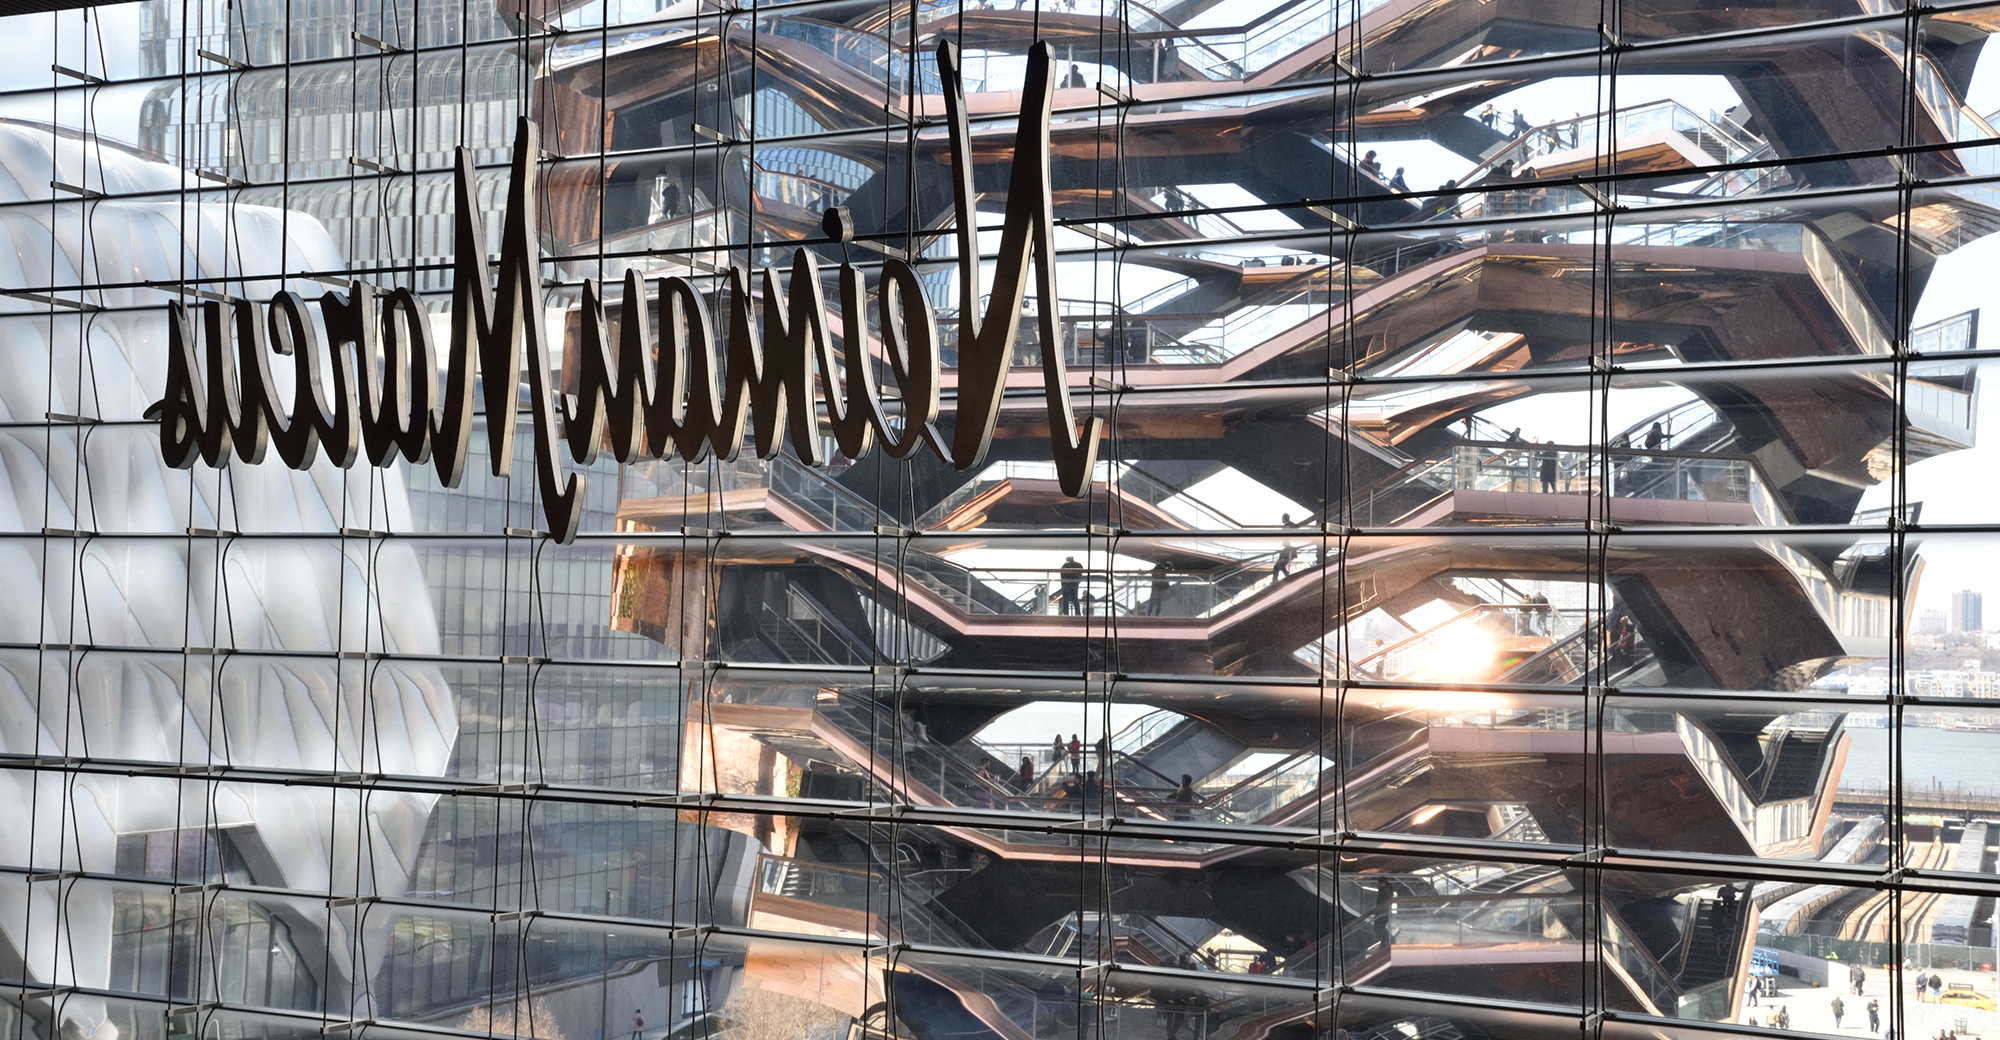 Neiman Marcus opens first Manhattan store at Hudson Yards - Bizwomen